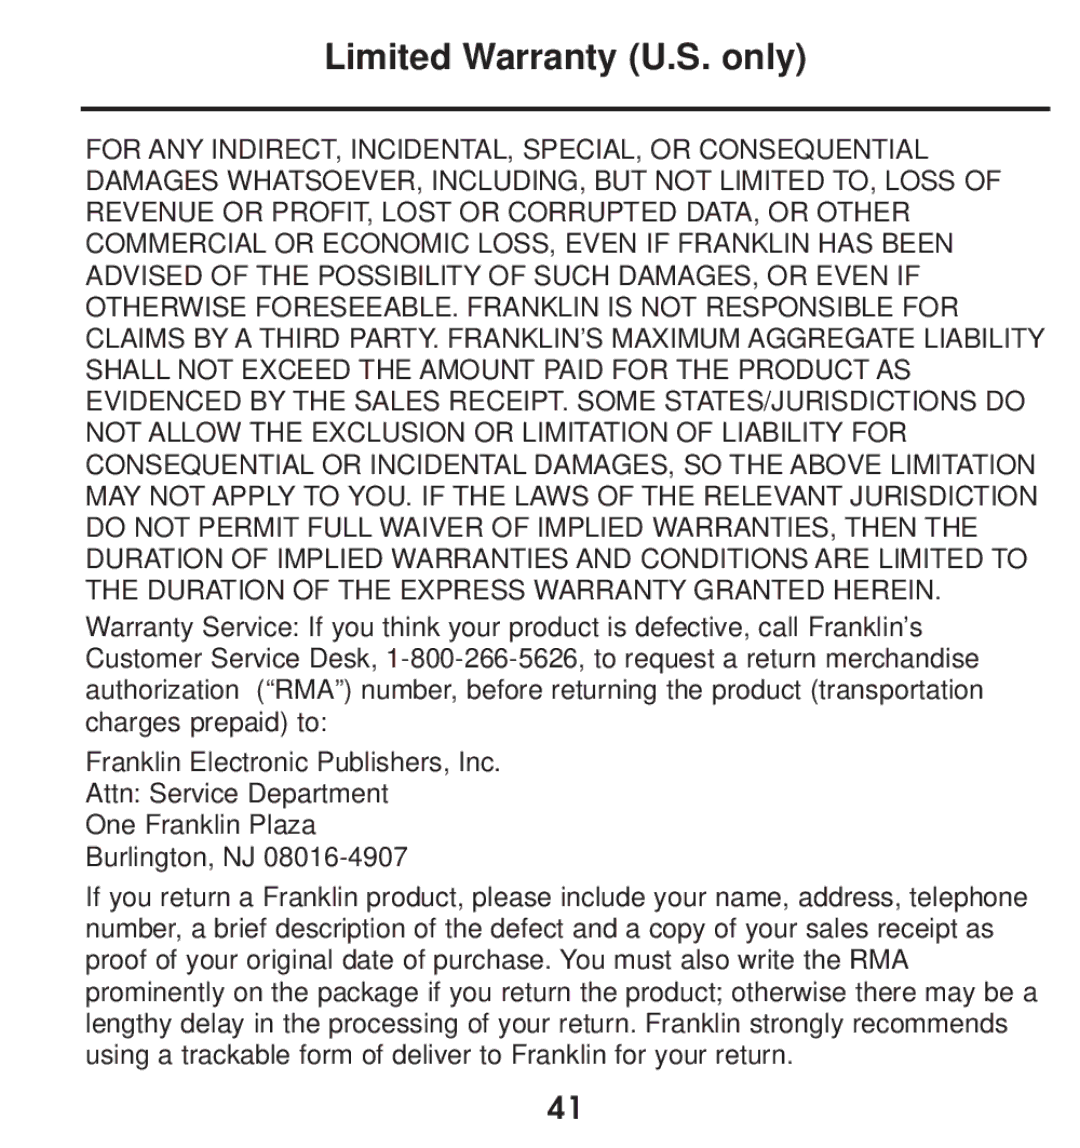 Franklin TGA-490 manual Limited Warranty U.S. only 